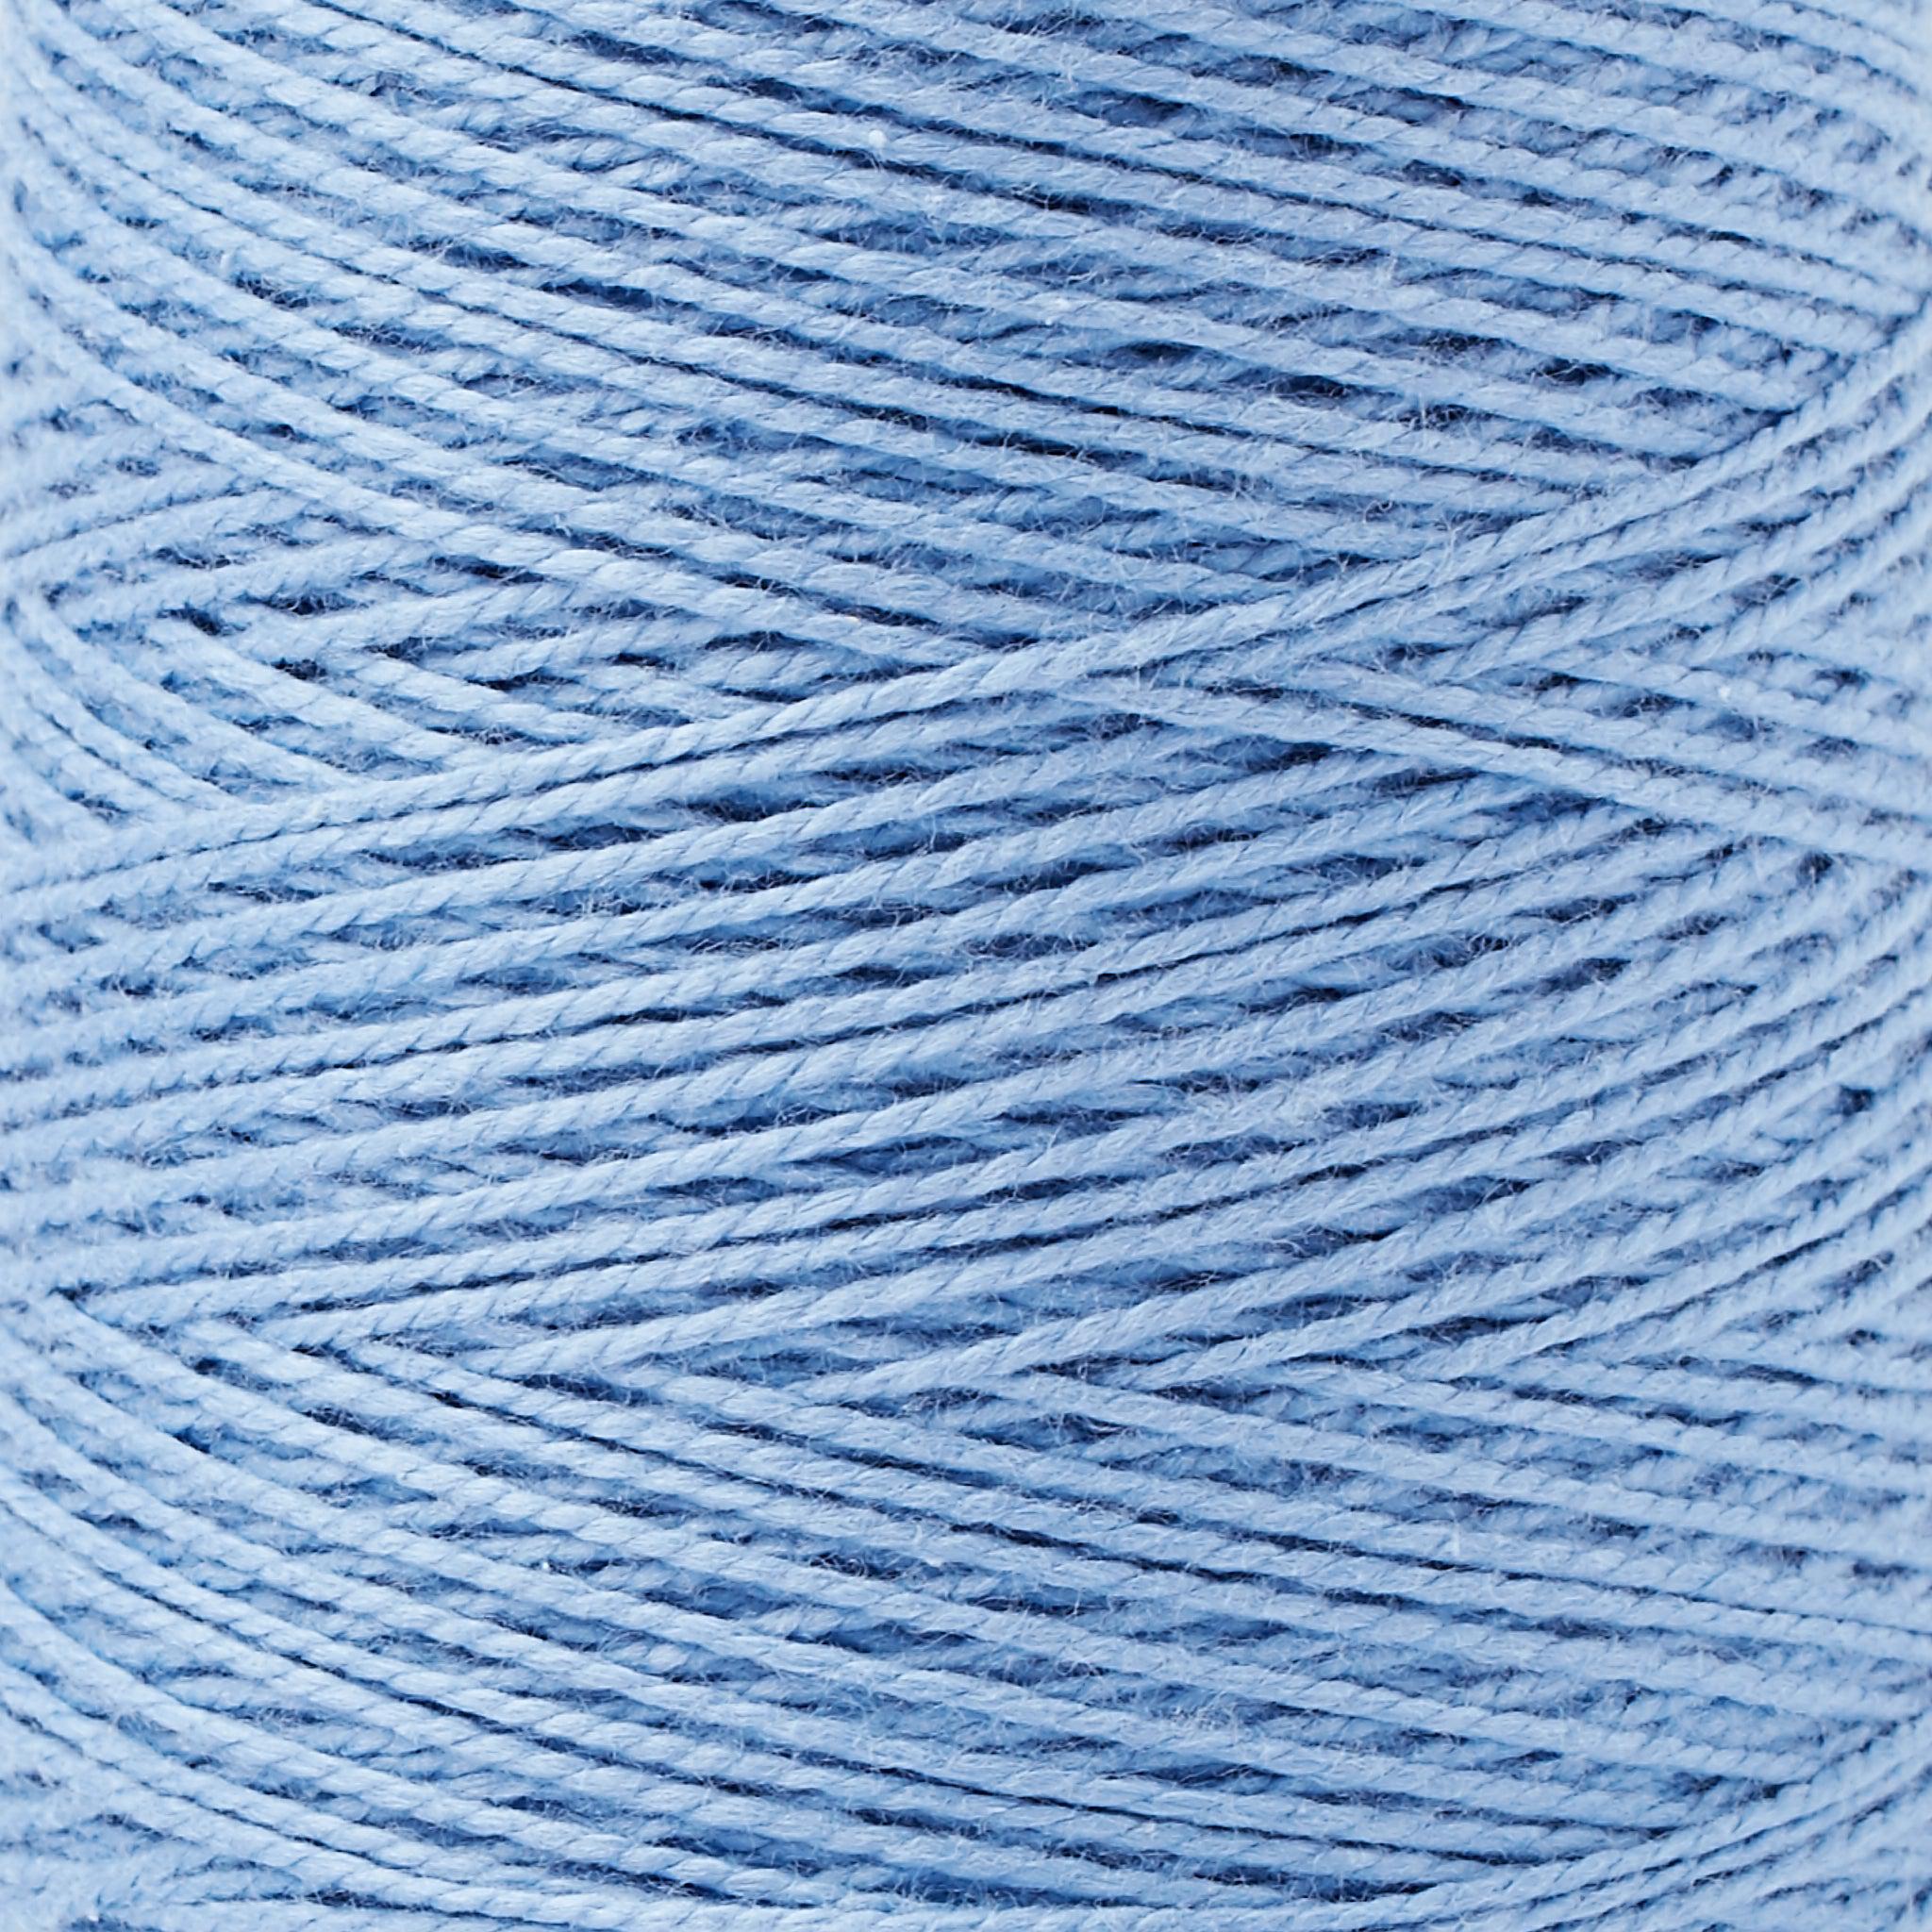 Beam 3/2 Organic Cotton Weaving Yarn ~ Pistachio - Gist Yarn